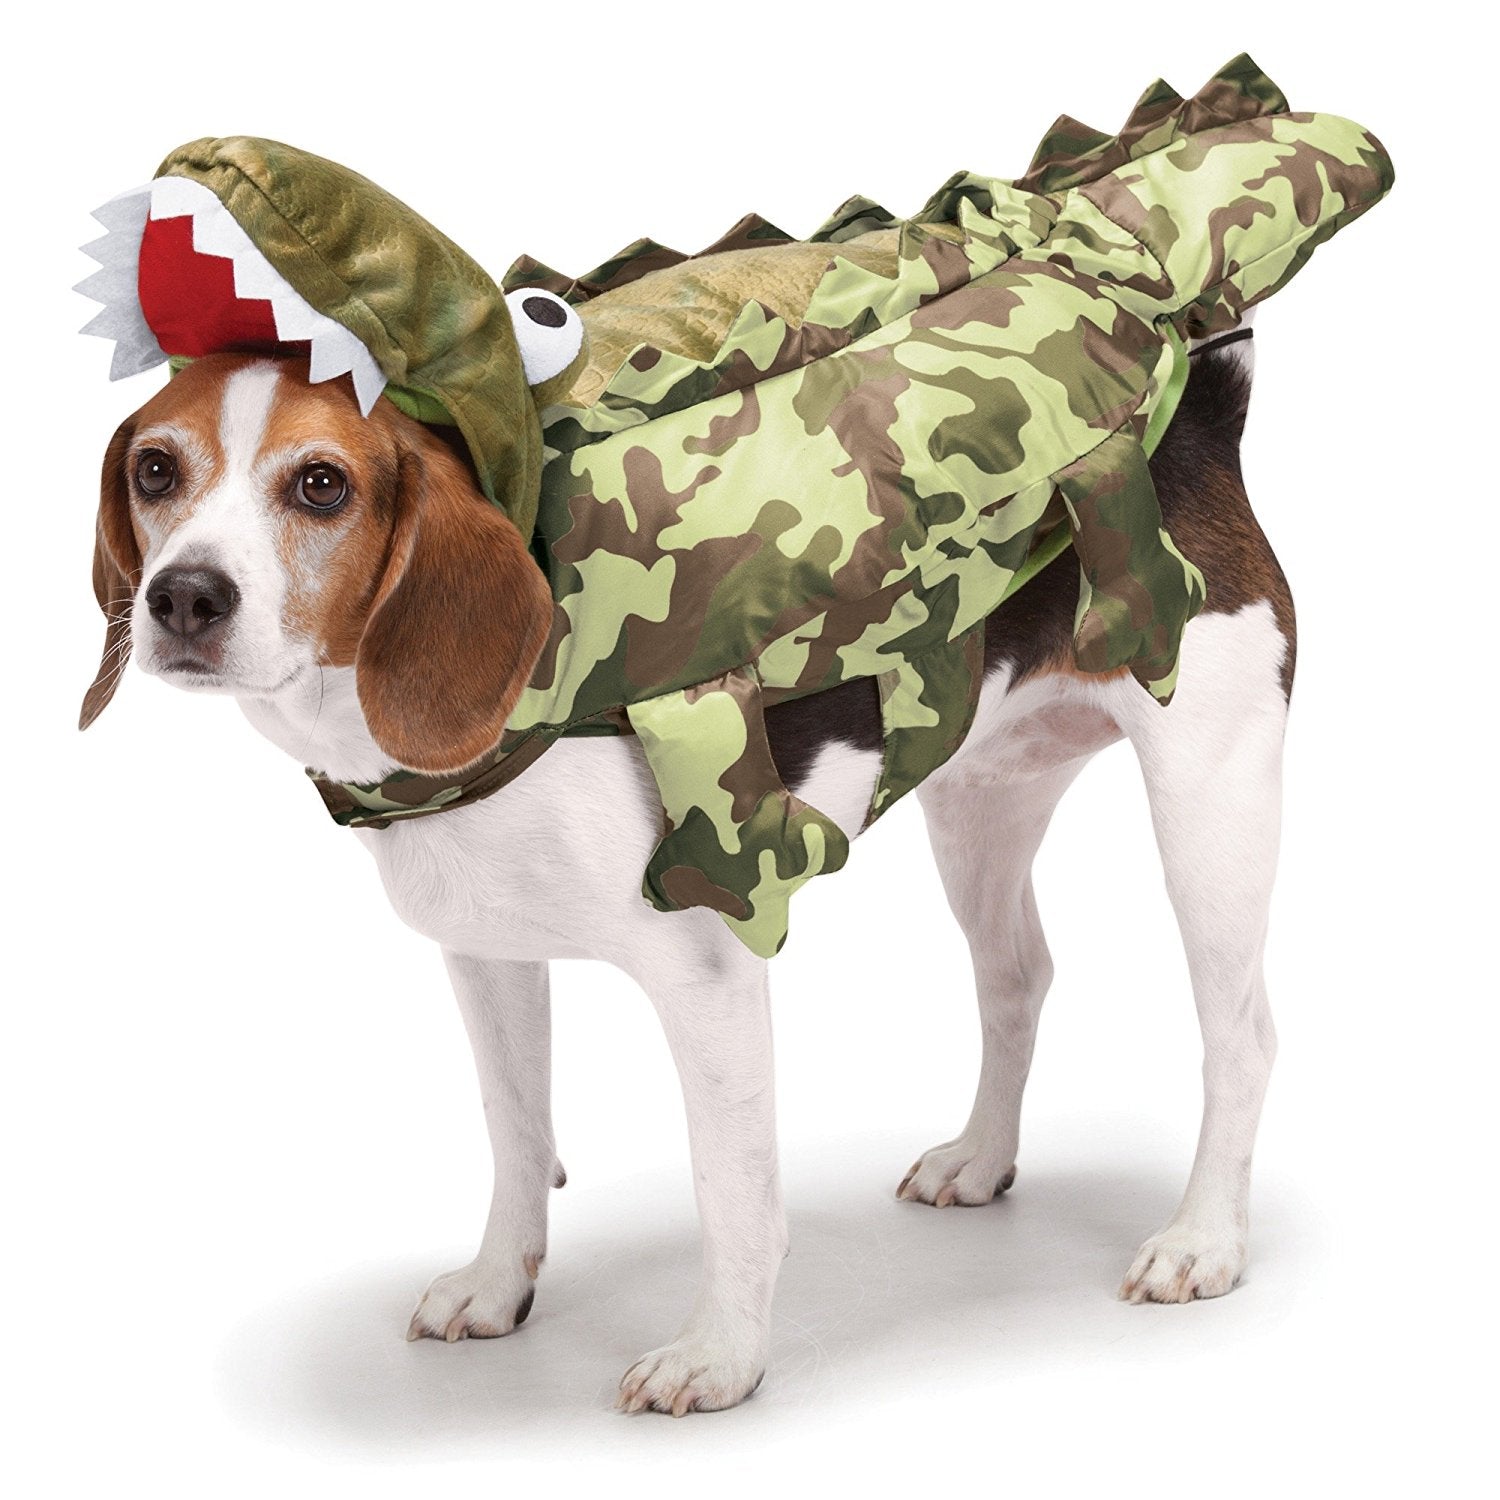 Zack & Zoey Camo Alligator Costume for Dogs, Medium